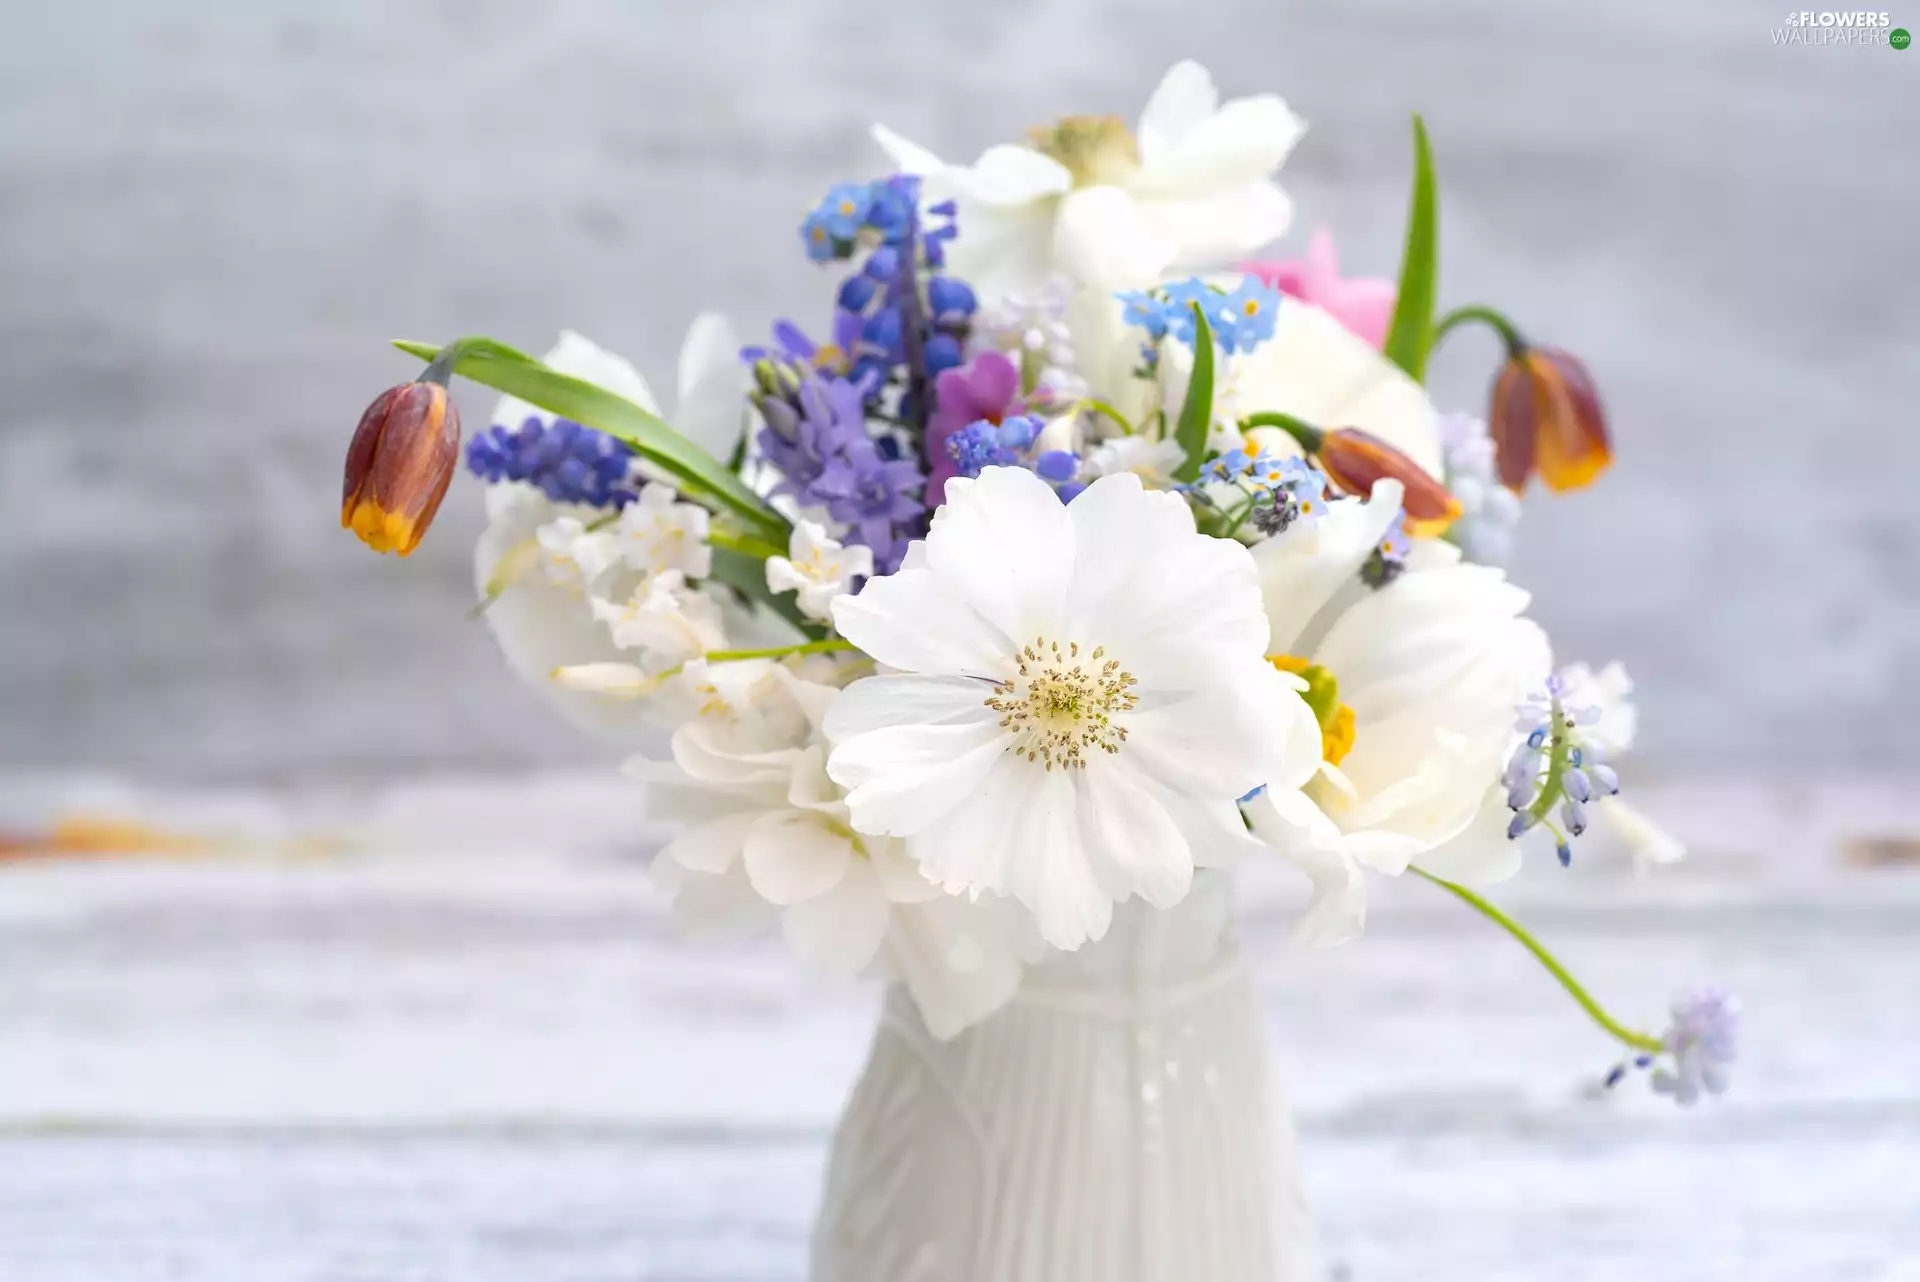 Bouquet of Flowers, vase